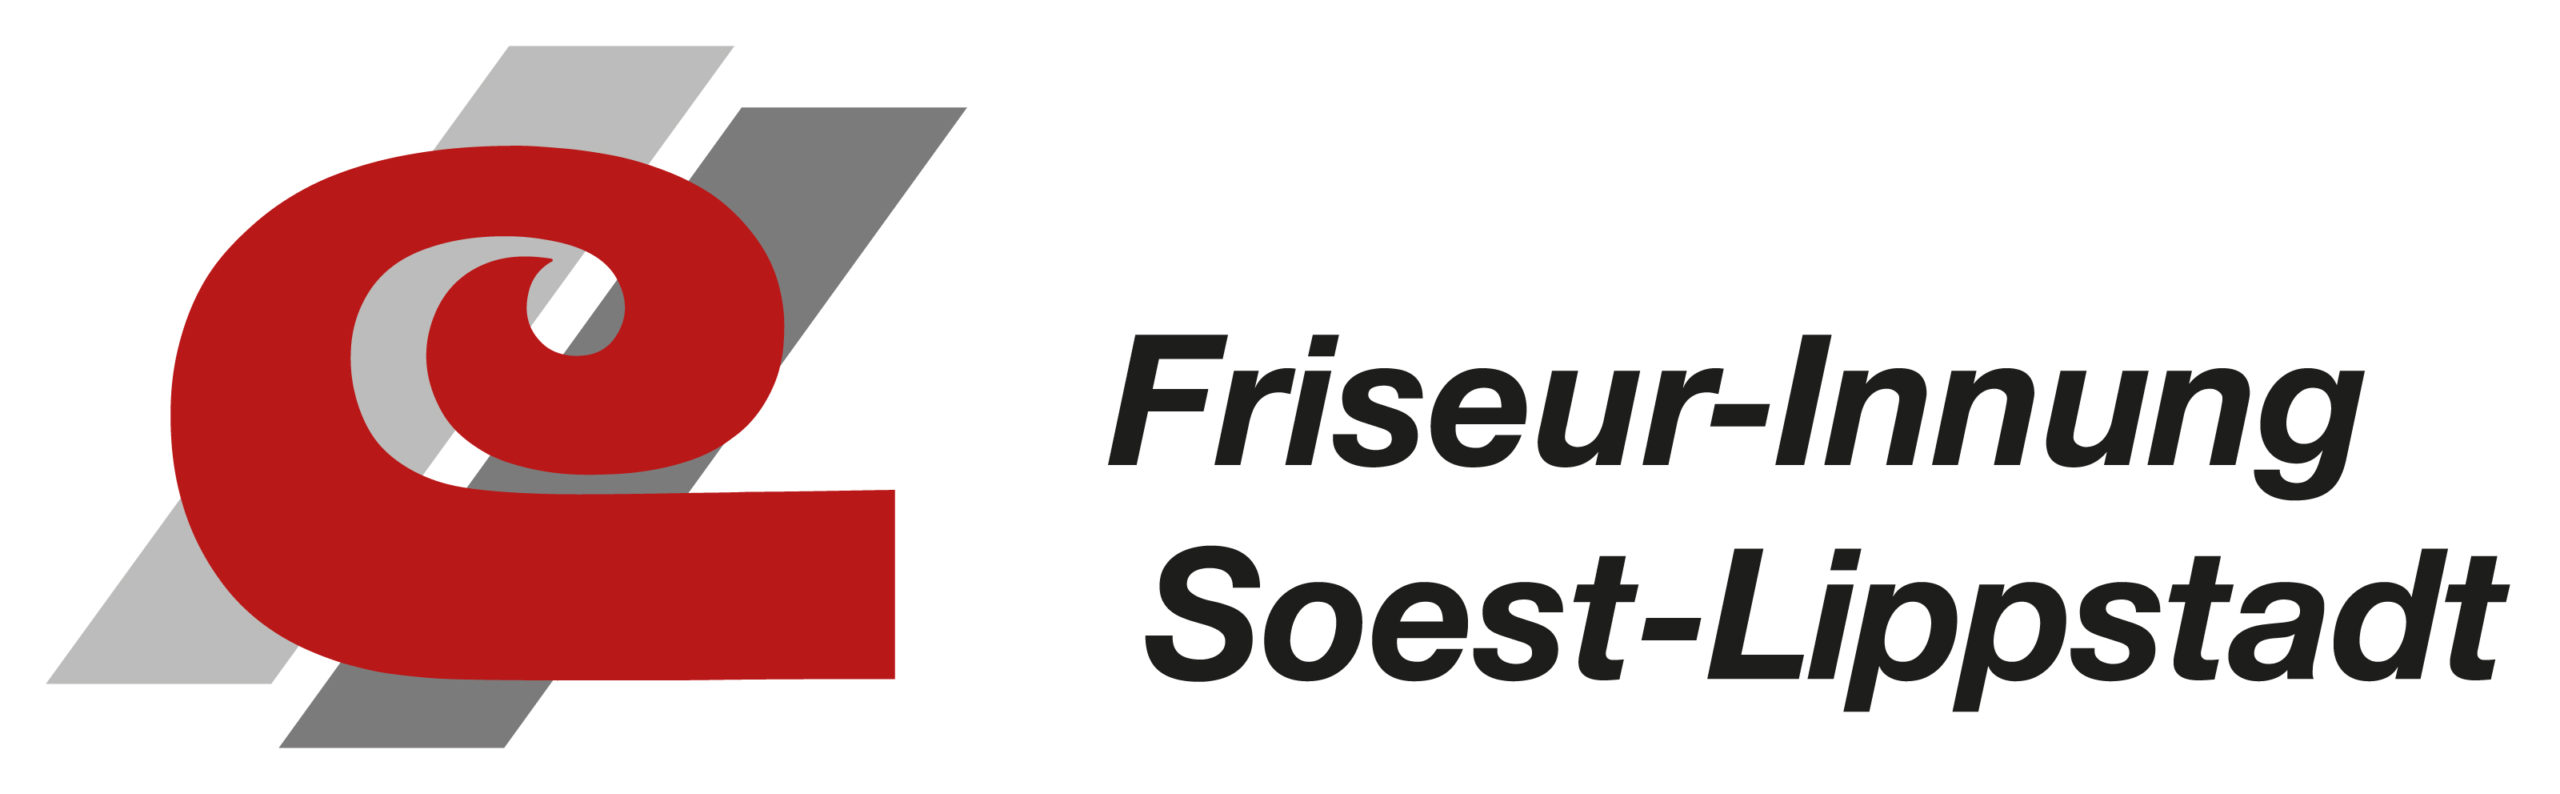 Friseur-Innung Soest-Lippstadt